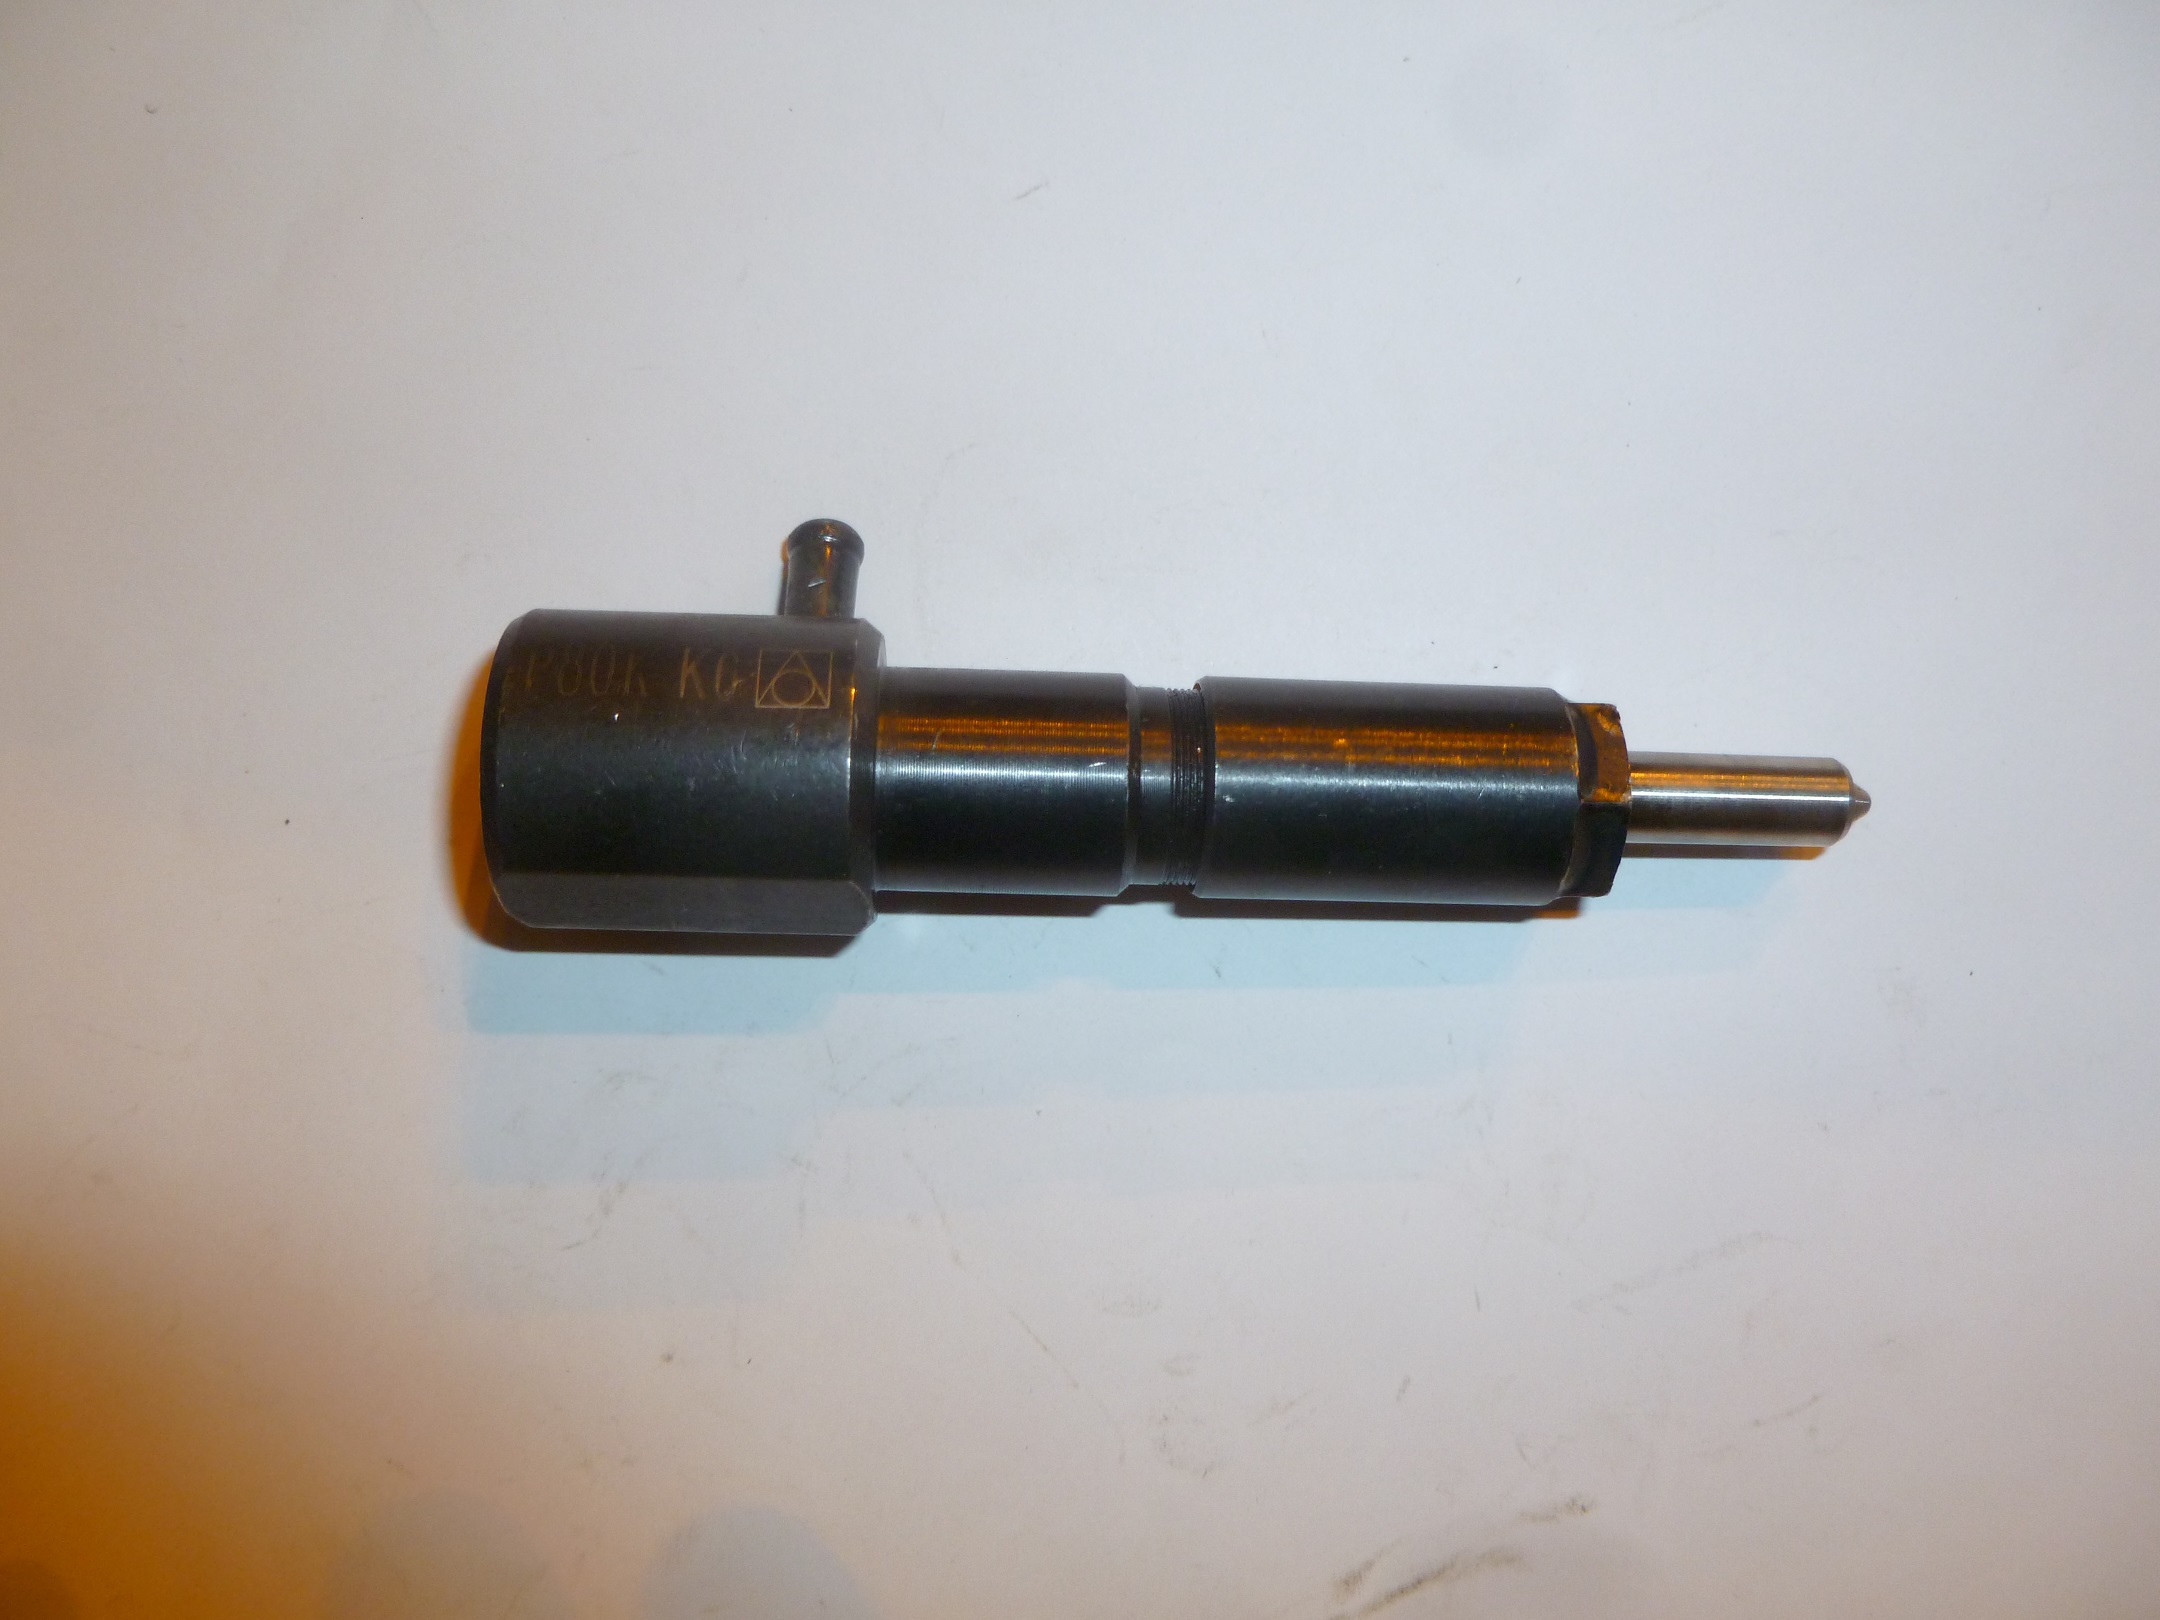 Форсунка SDG 5000E (КМ186FA) (Oil nozzle ,186-74)